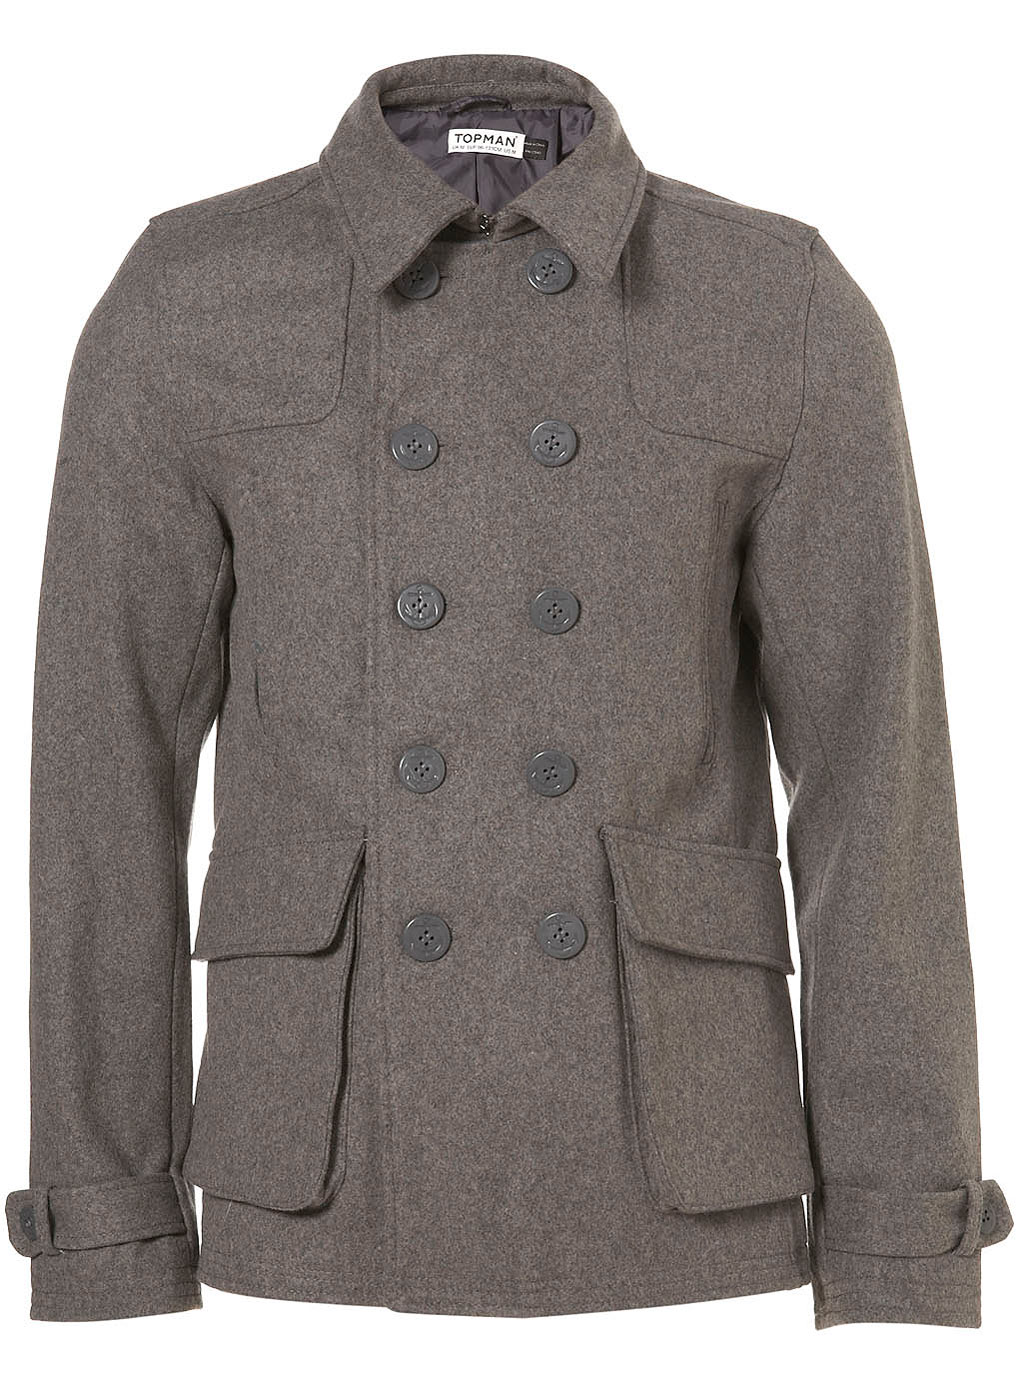 Topman Light Grey Wool Peacoat Jacket in Gray for Men (grey) | Lyst